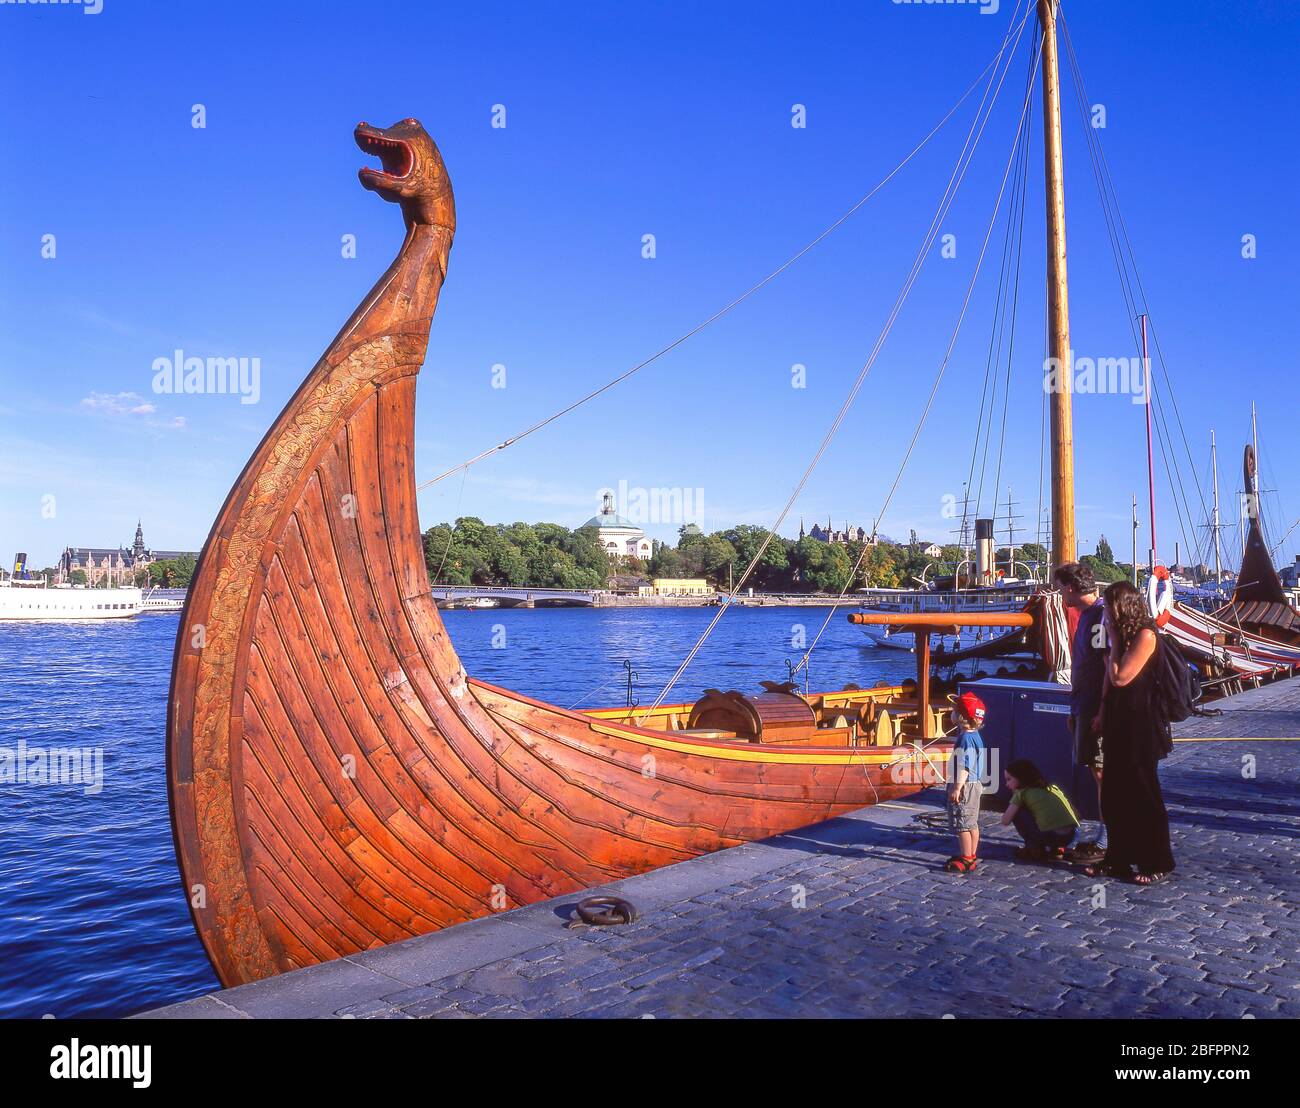 Replica viking ship berthed in harbour, Gamla Stan (Old Town), Stadsholmen, Stockholm, Kingdom of Sweden Stock Photo